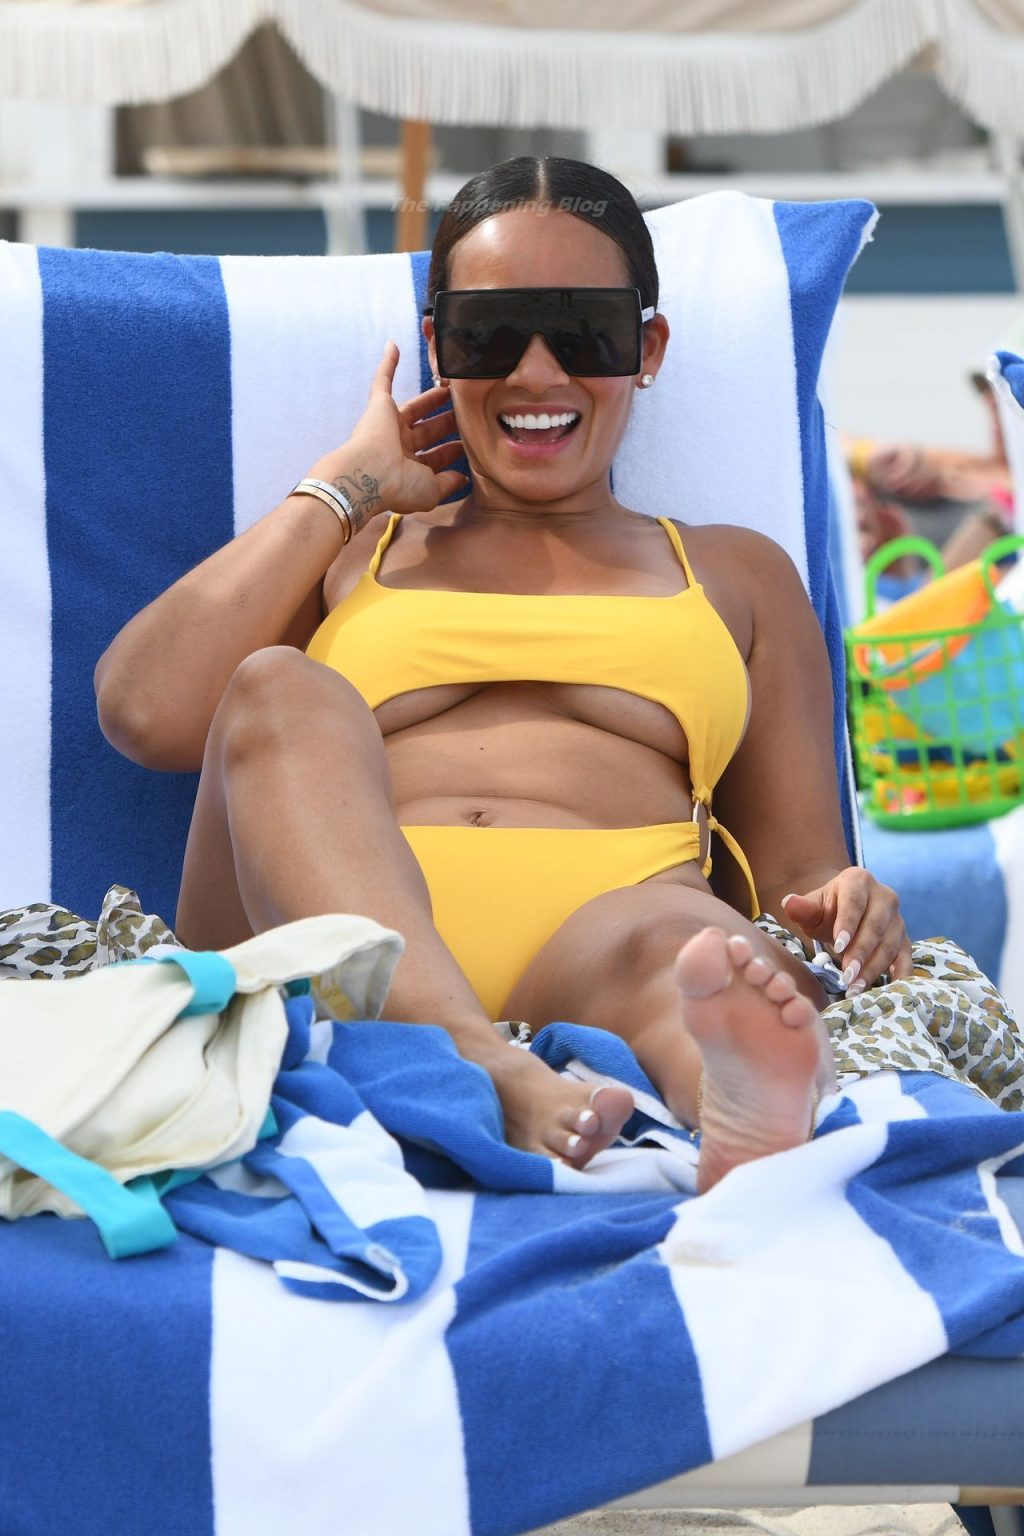 Evelyn Lozada Flaunts Her Underboob in a Bikini on the Beach in Miami (25 Photos)